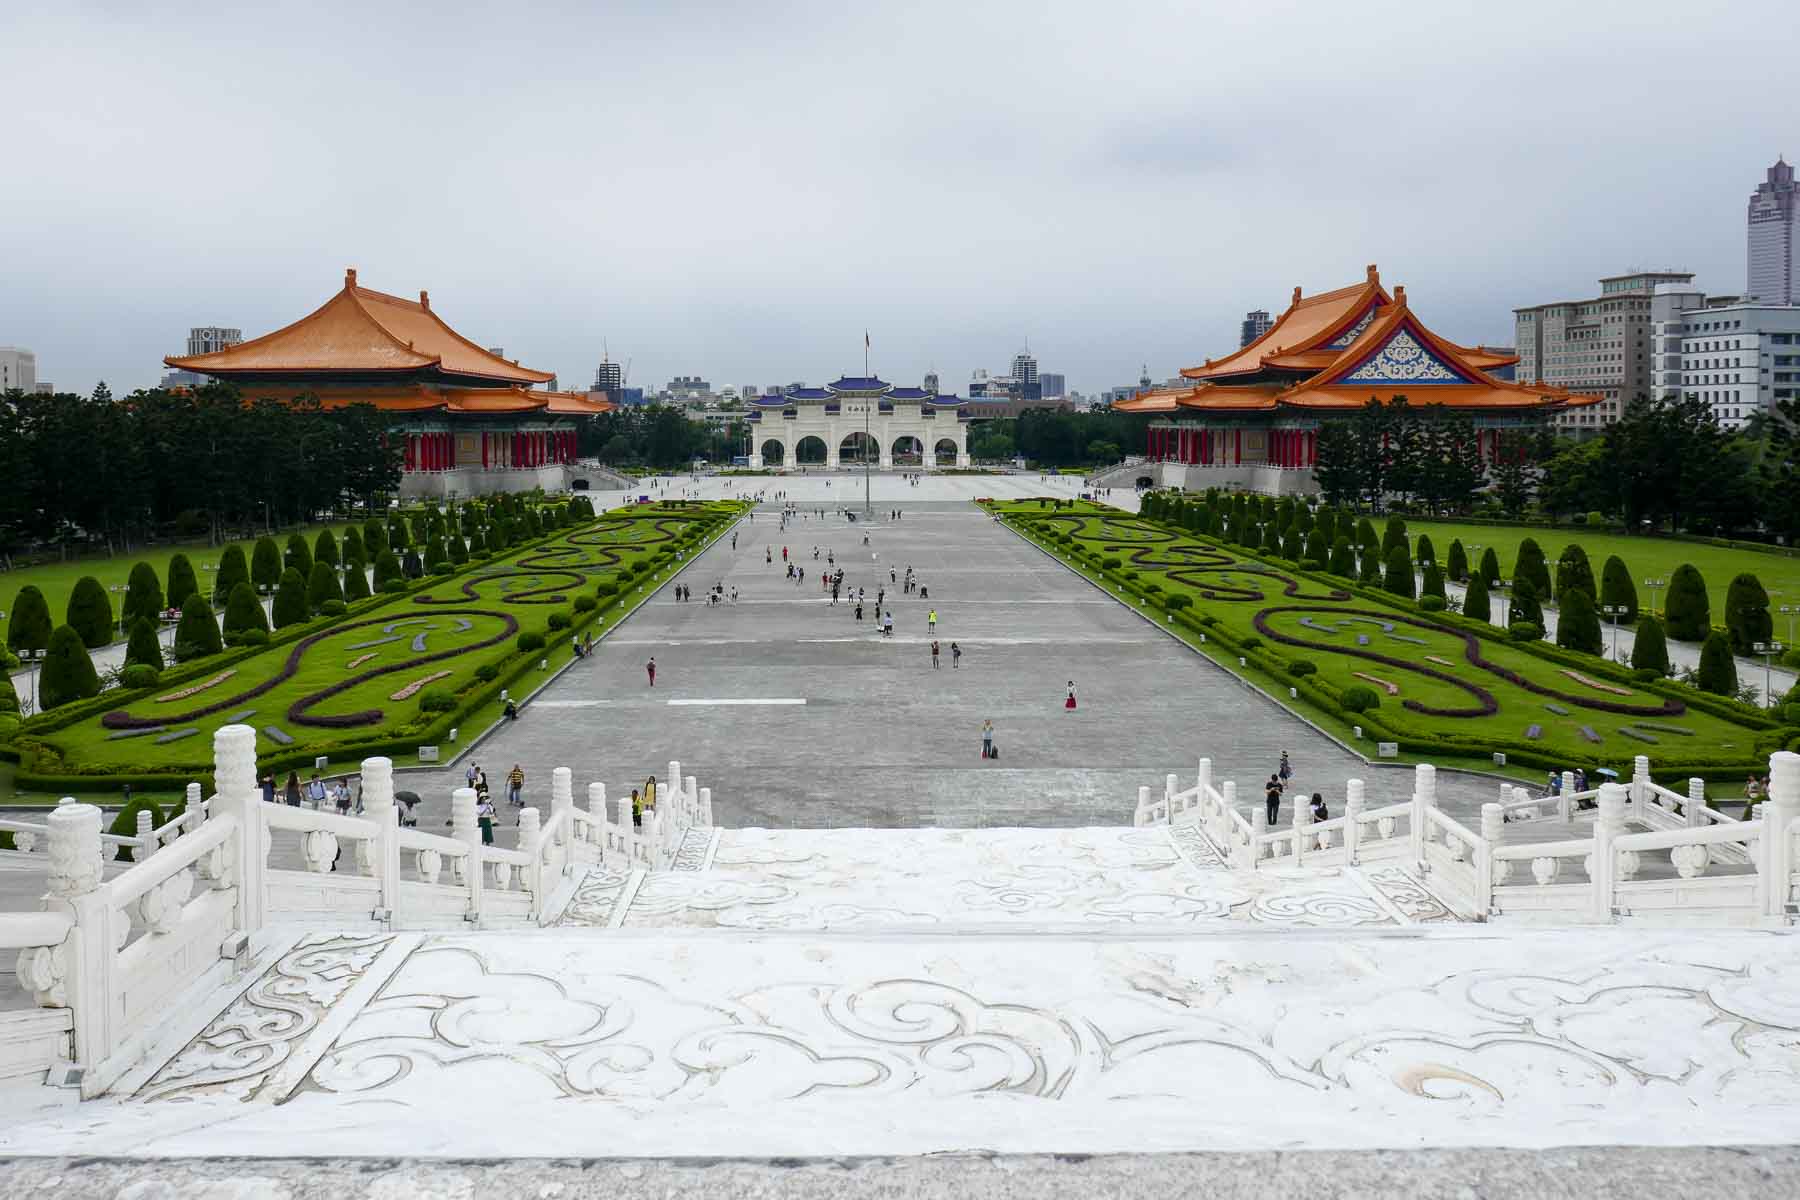 Chiang Kai-shek memorial park as seen from the Hall